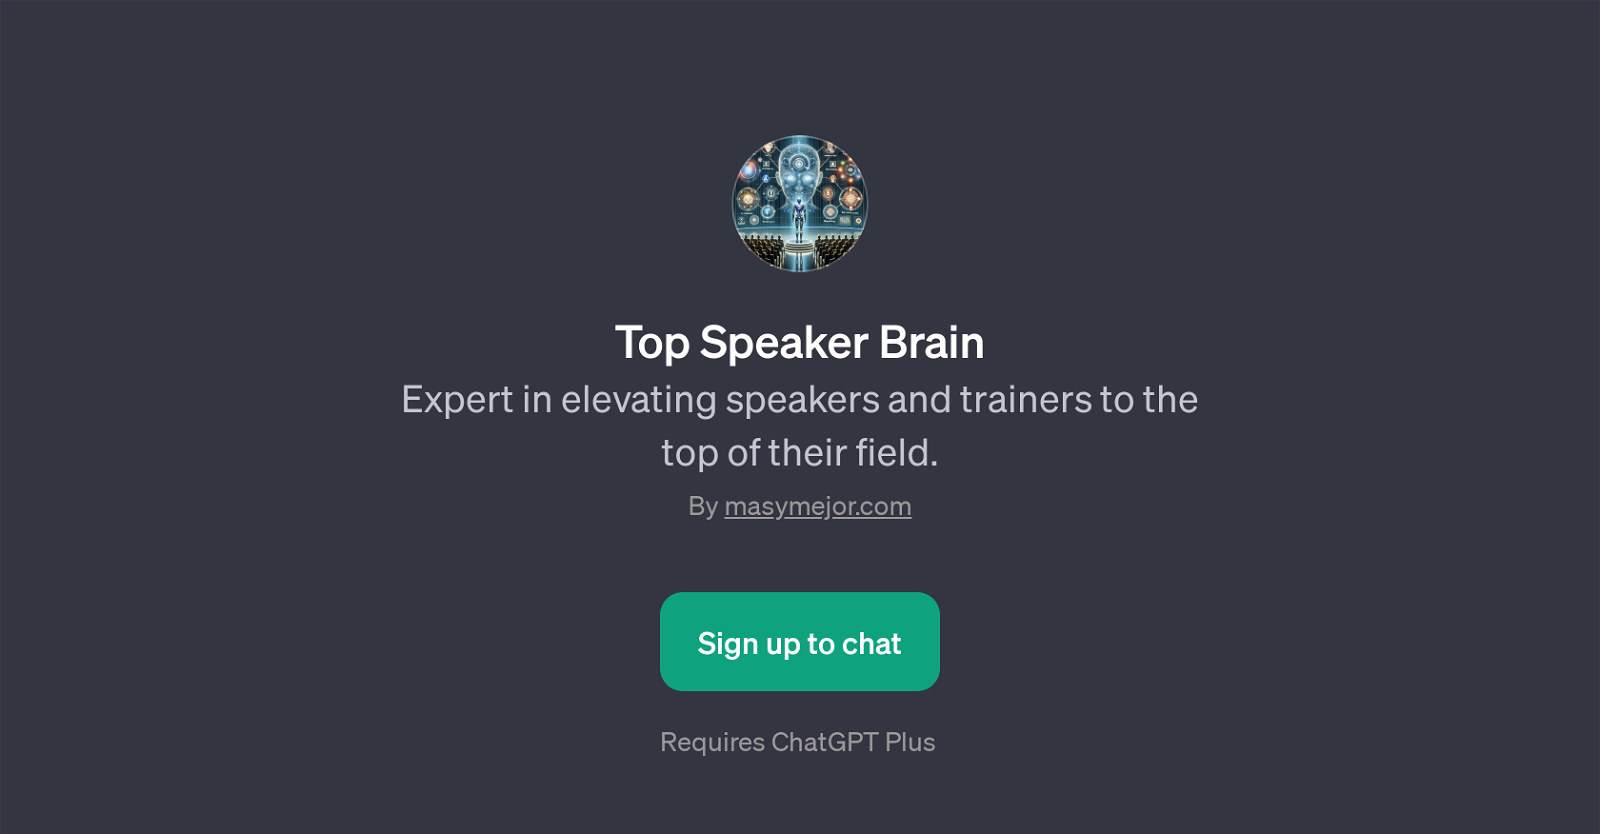 Top Speaker Brain website